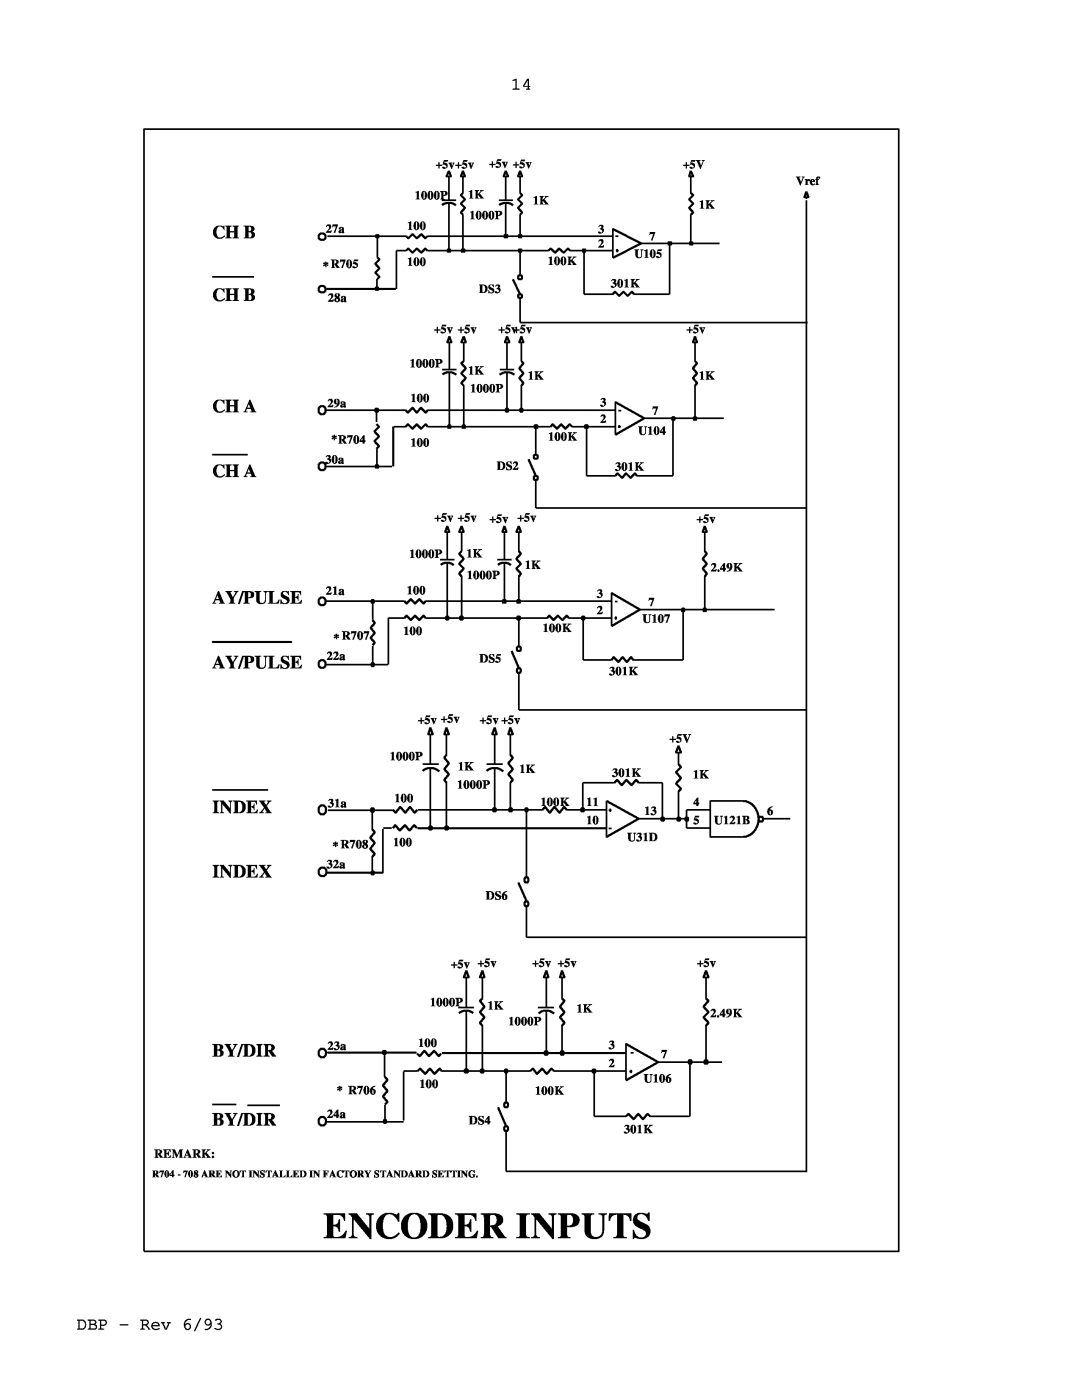 Elmo DBP SERIES manual Encoder Inputs, Ch B, Ch A, Ay/Pulse, Index, By/Dir 